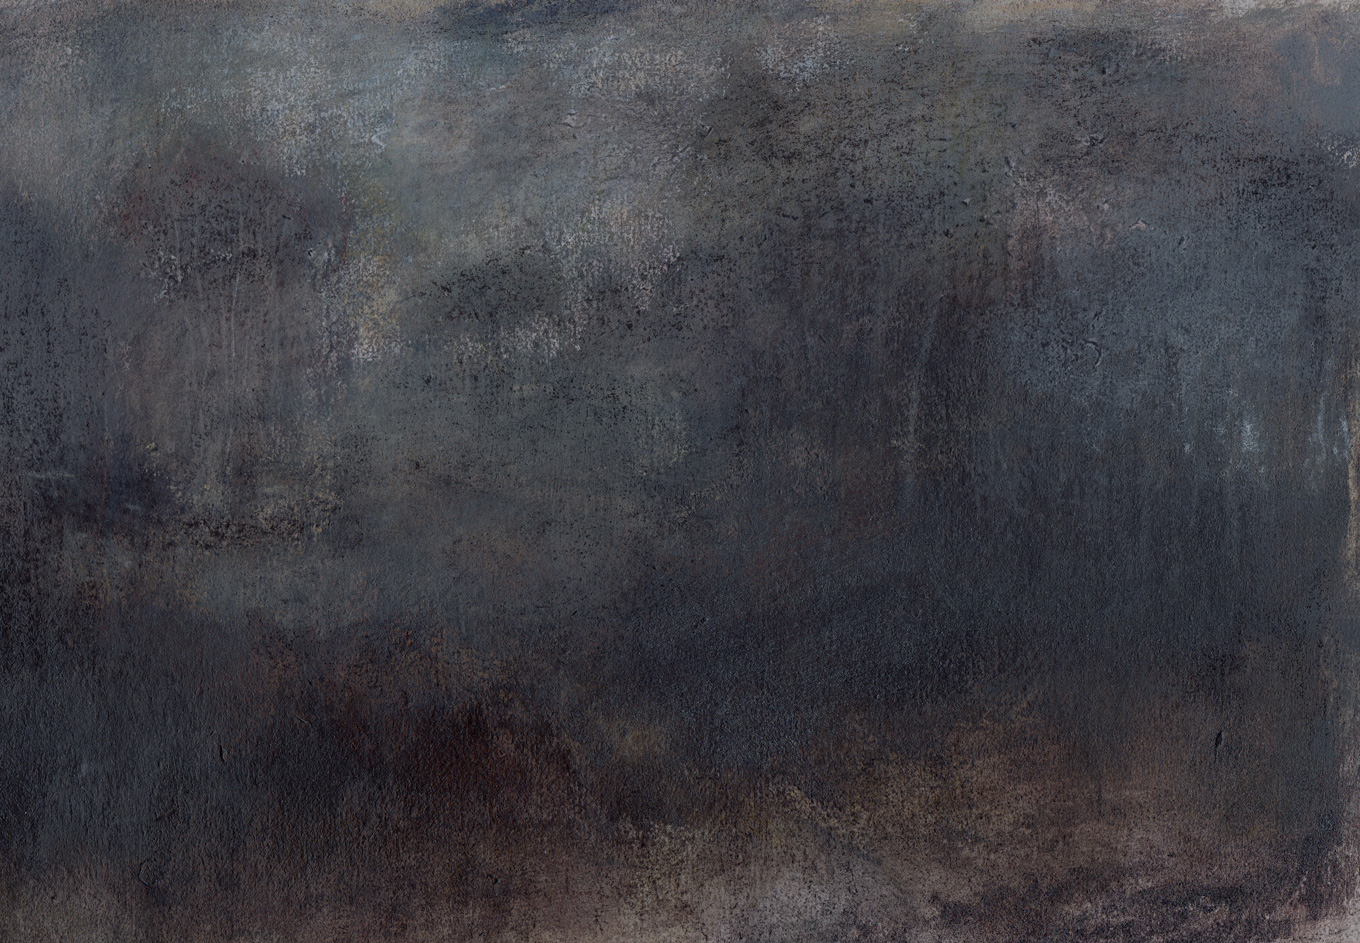 L1203 - Nicholas Herbert, British Artist, mixed media landscape painting of Chobham Common, mixed media on paper, 2020